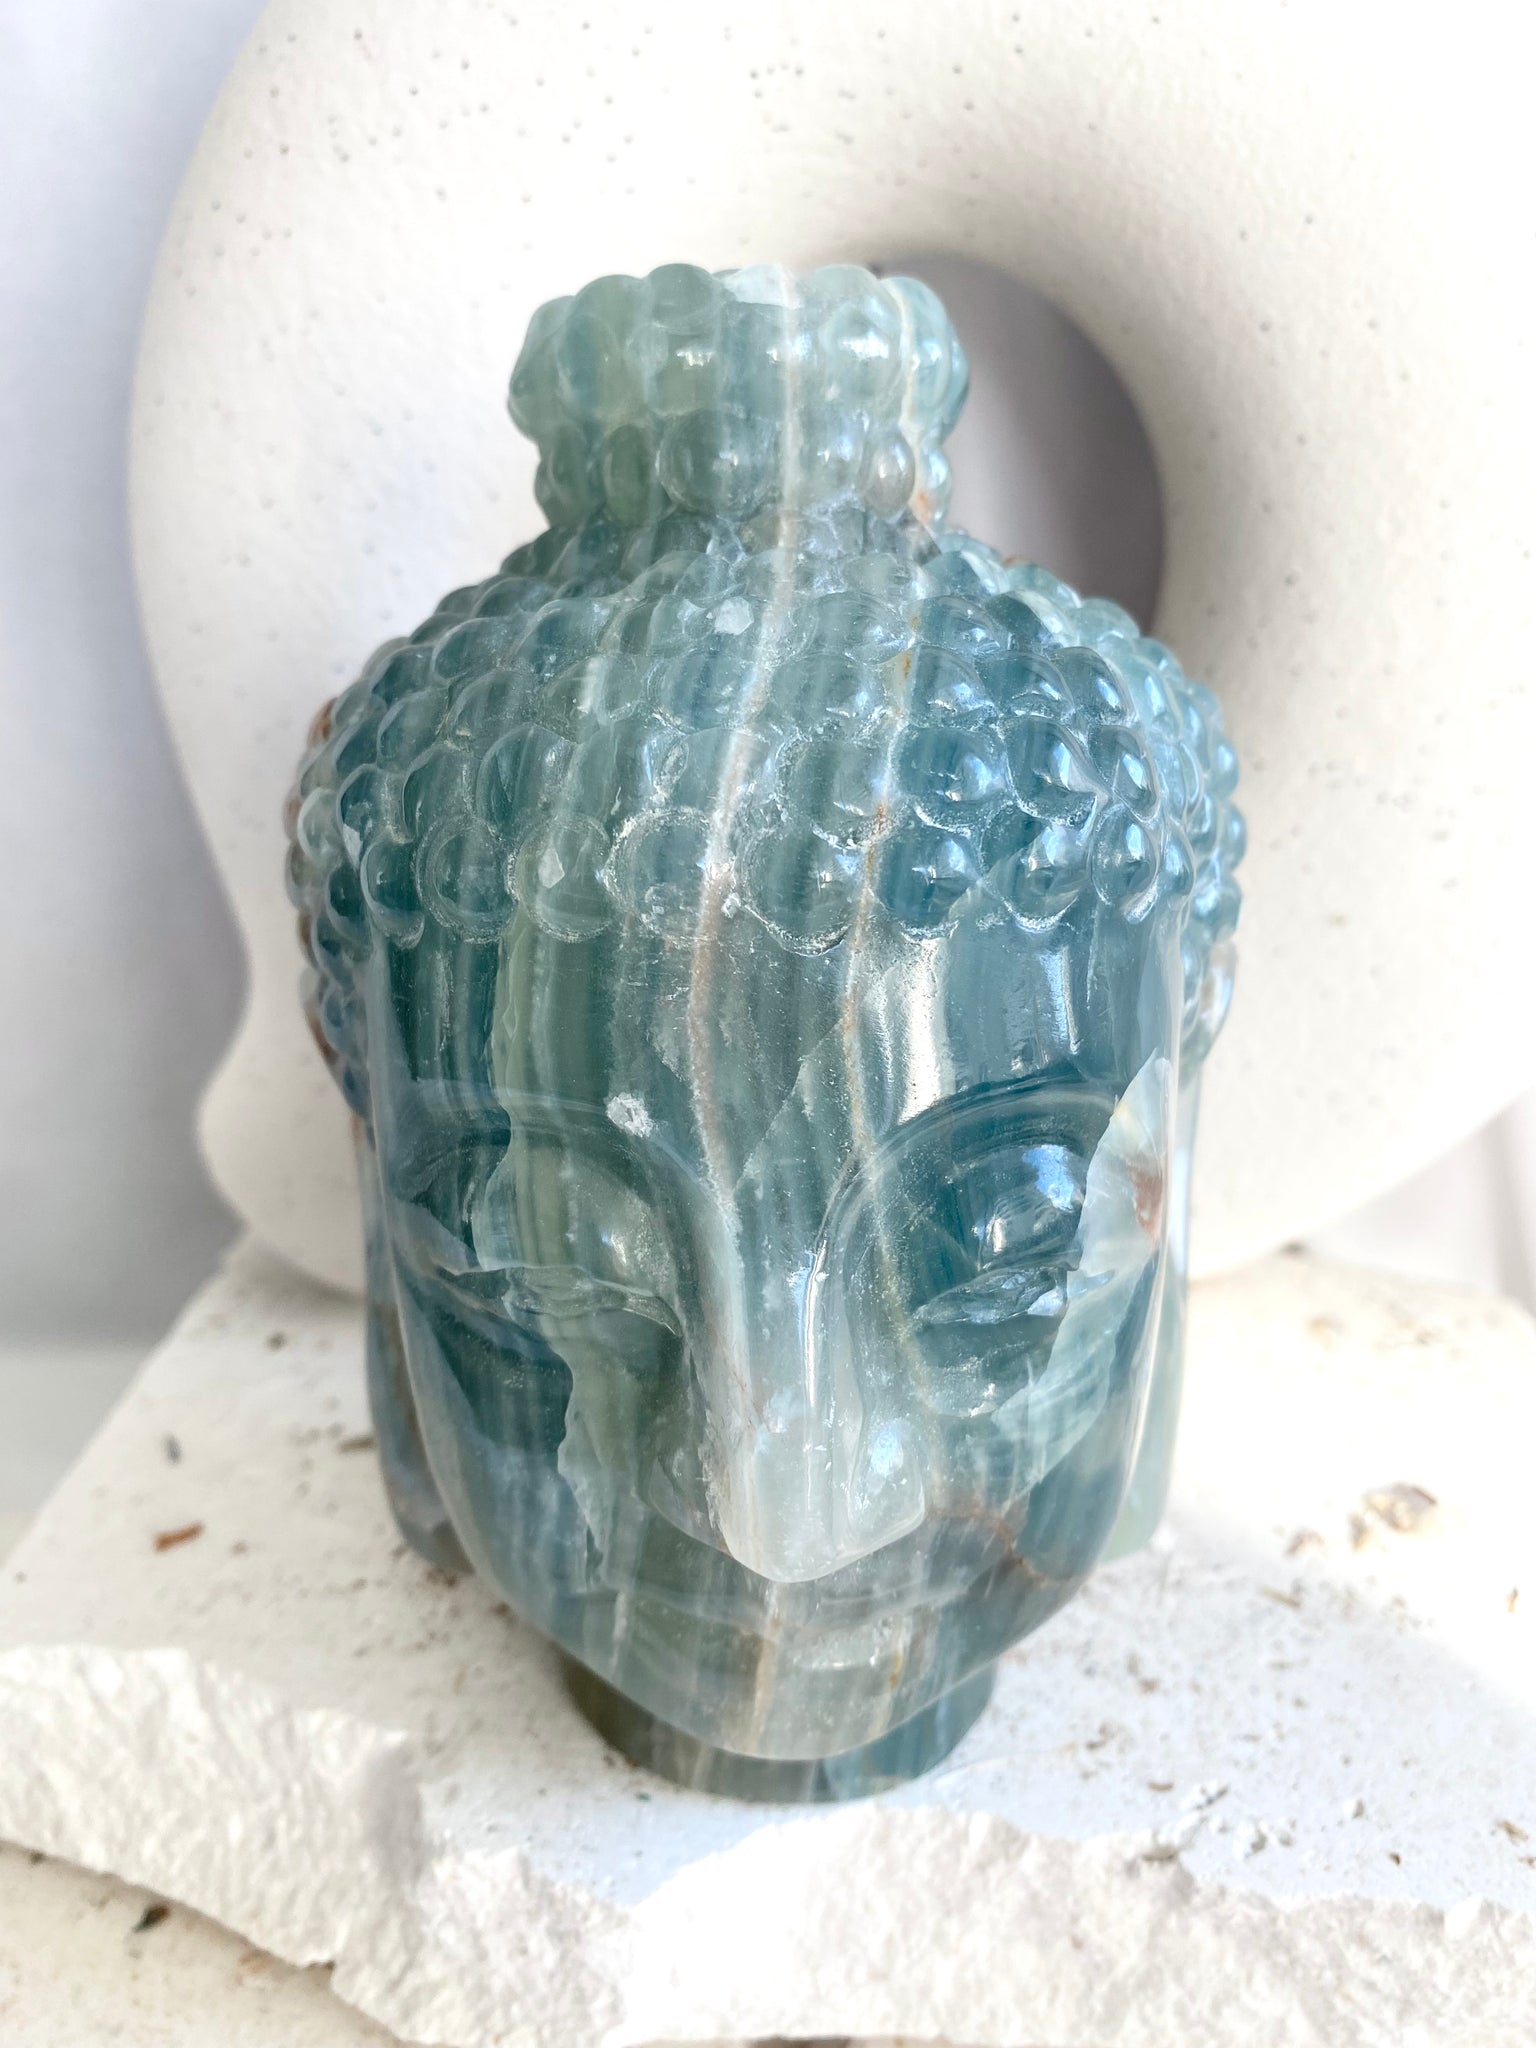 lemurian aquatine calcite / blue onyx budddha head crystal carving